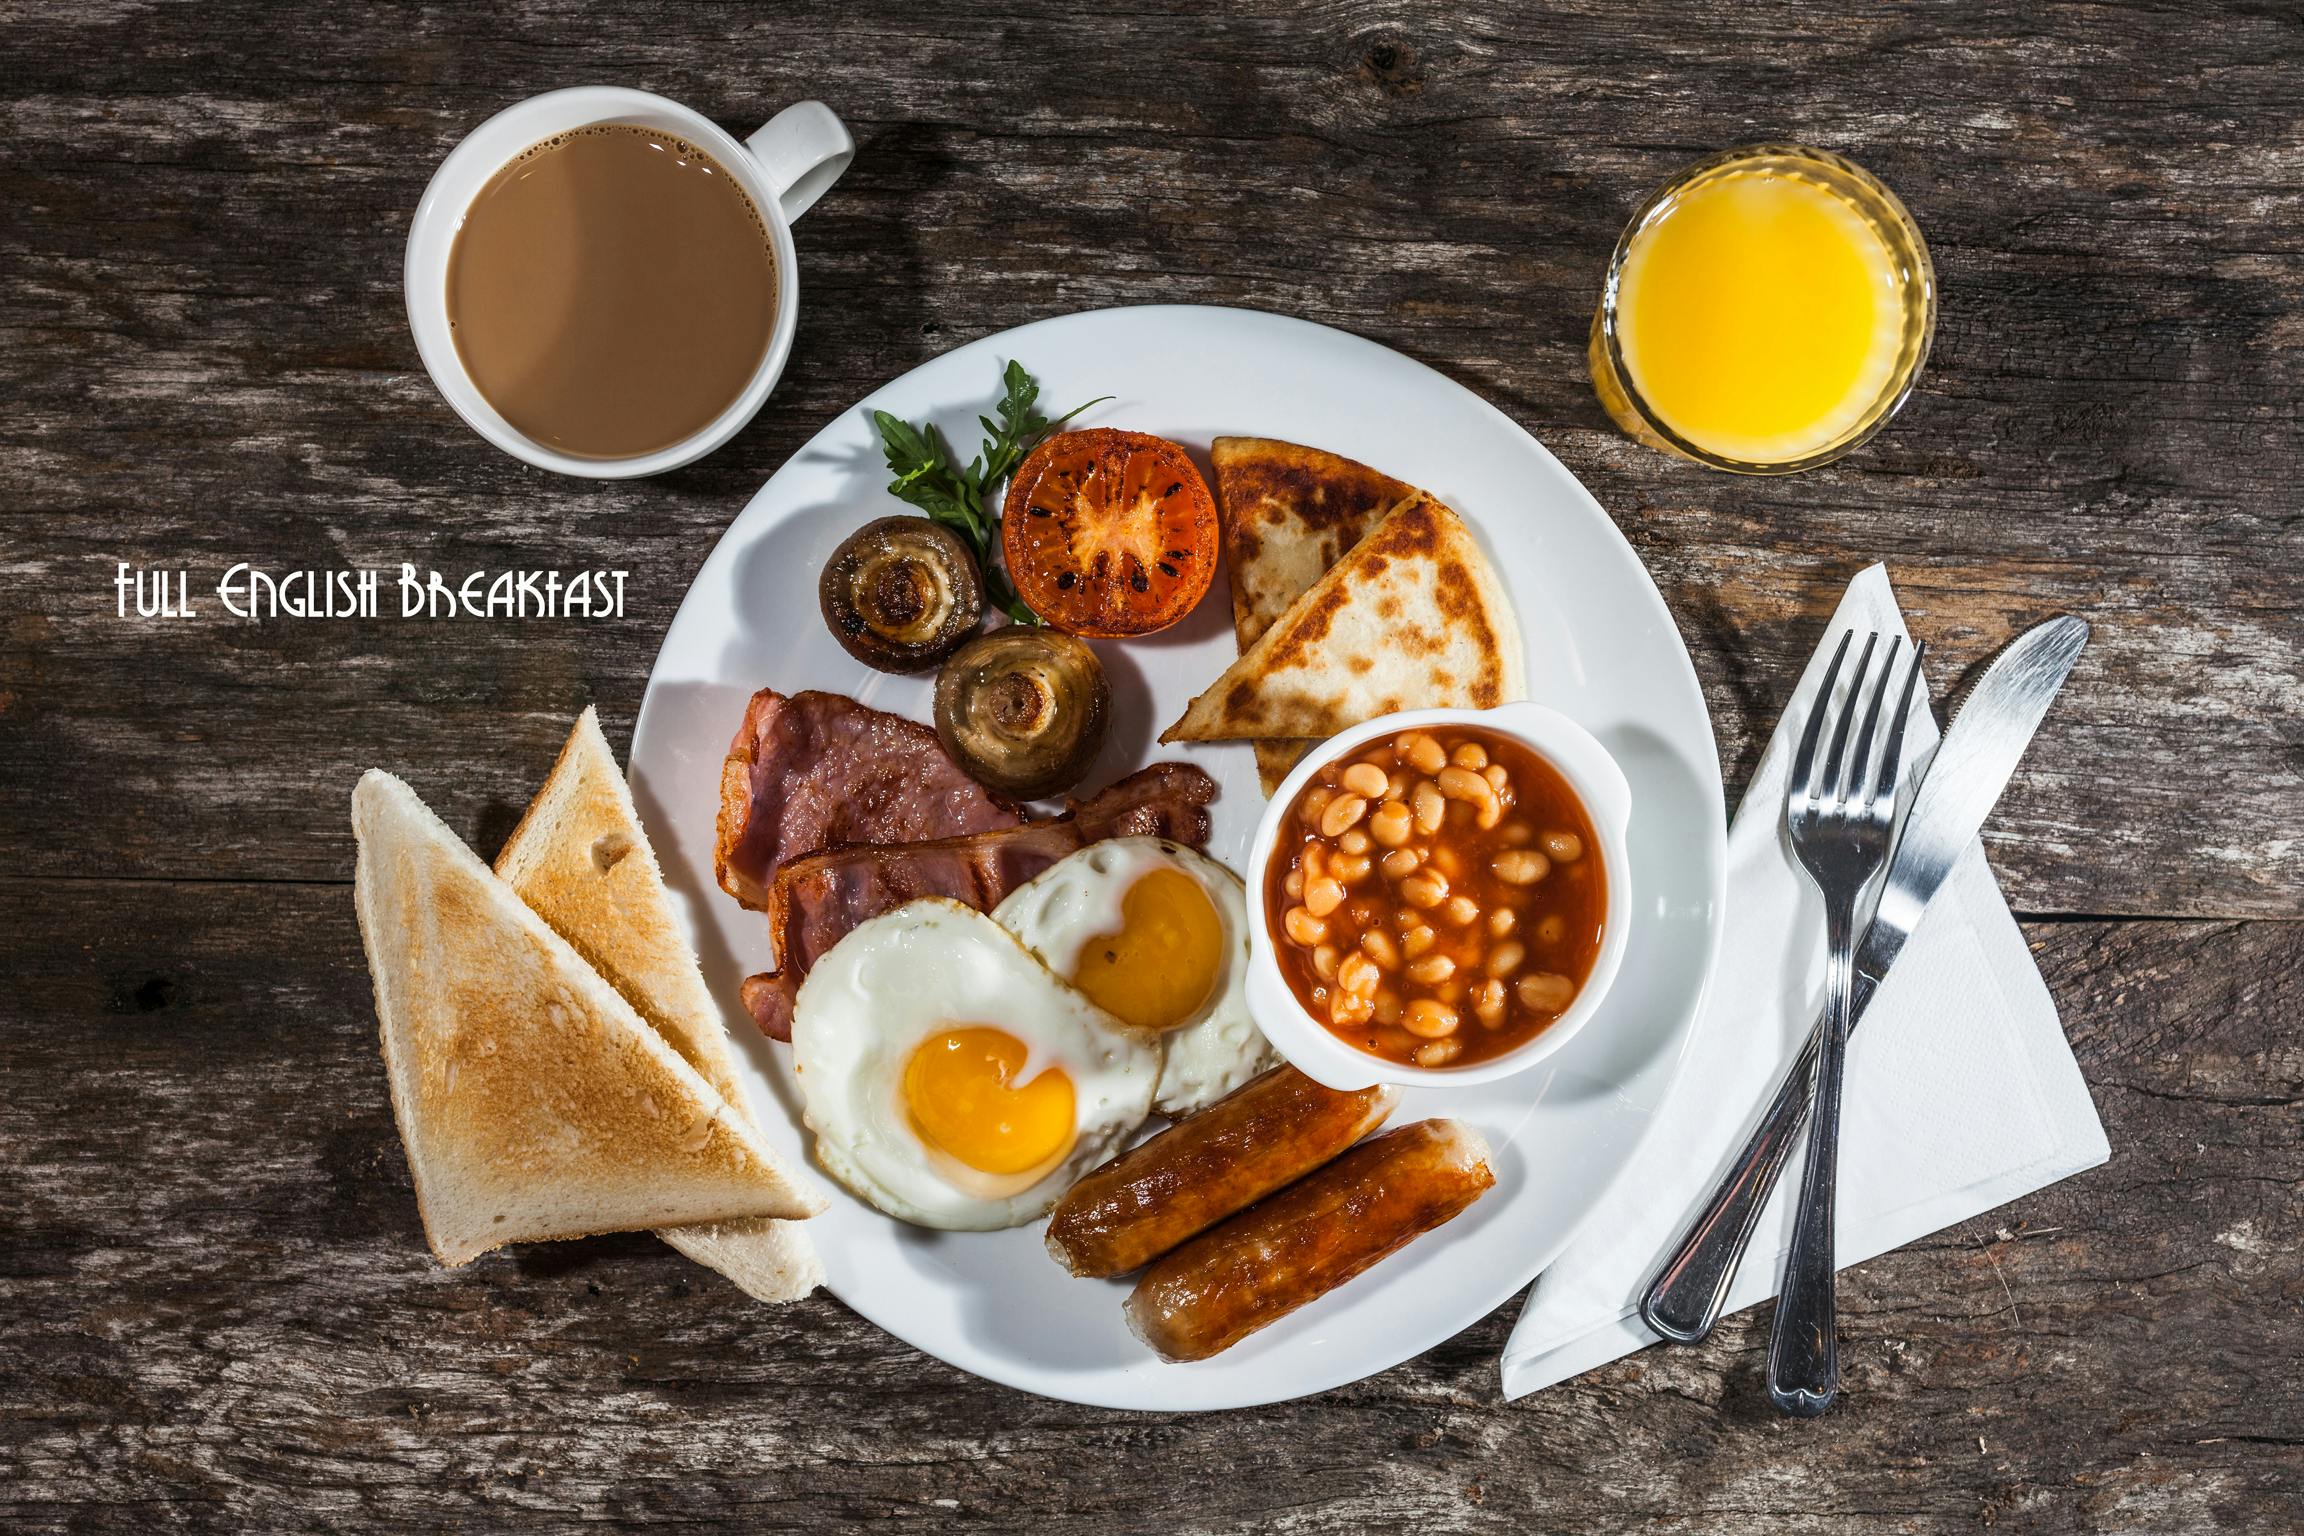 A freshly prepared full Ulster breakfast with coffee and orange juice